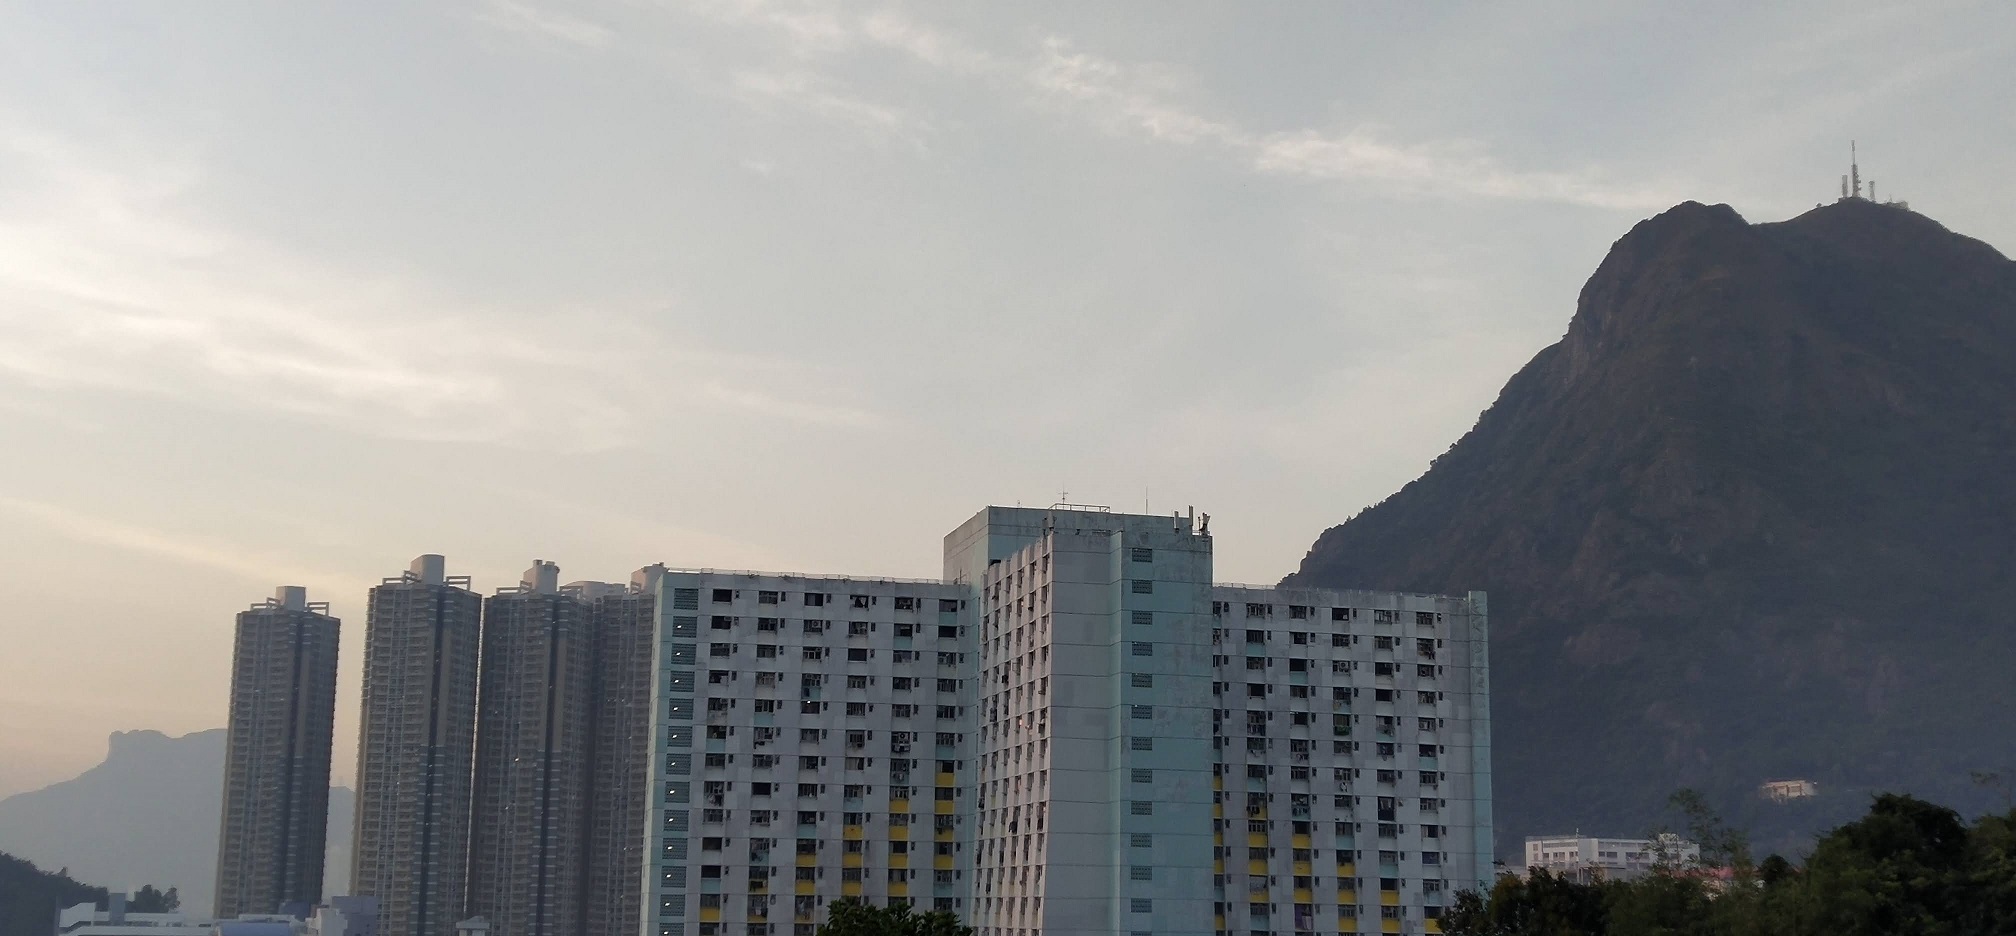 Left to right, Lion Rock, Shun Lee Estate, Kowloon Peak